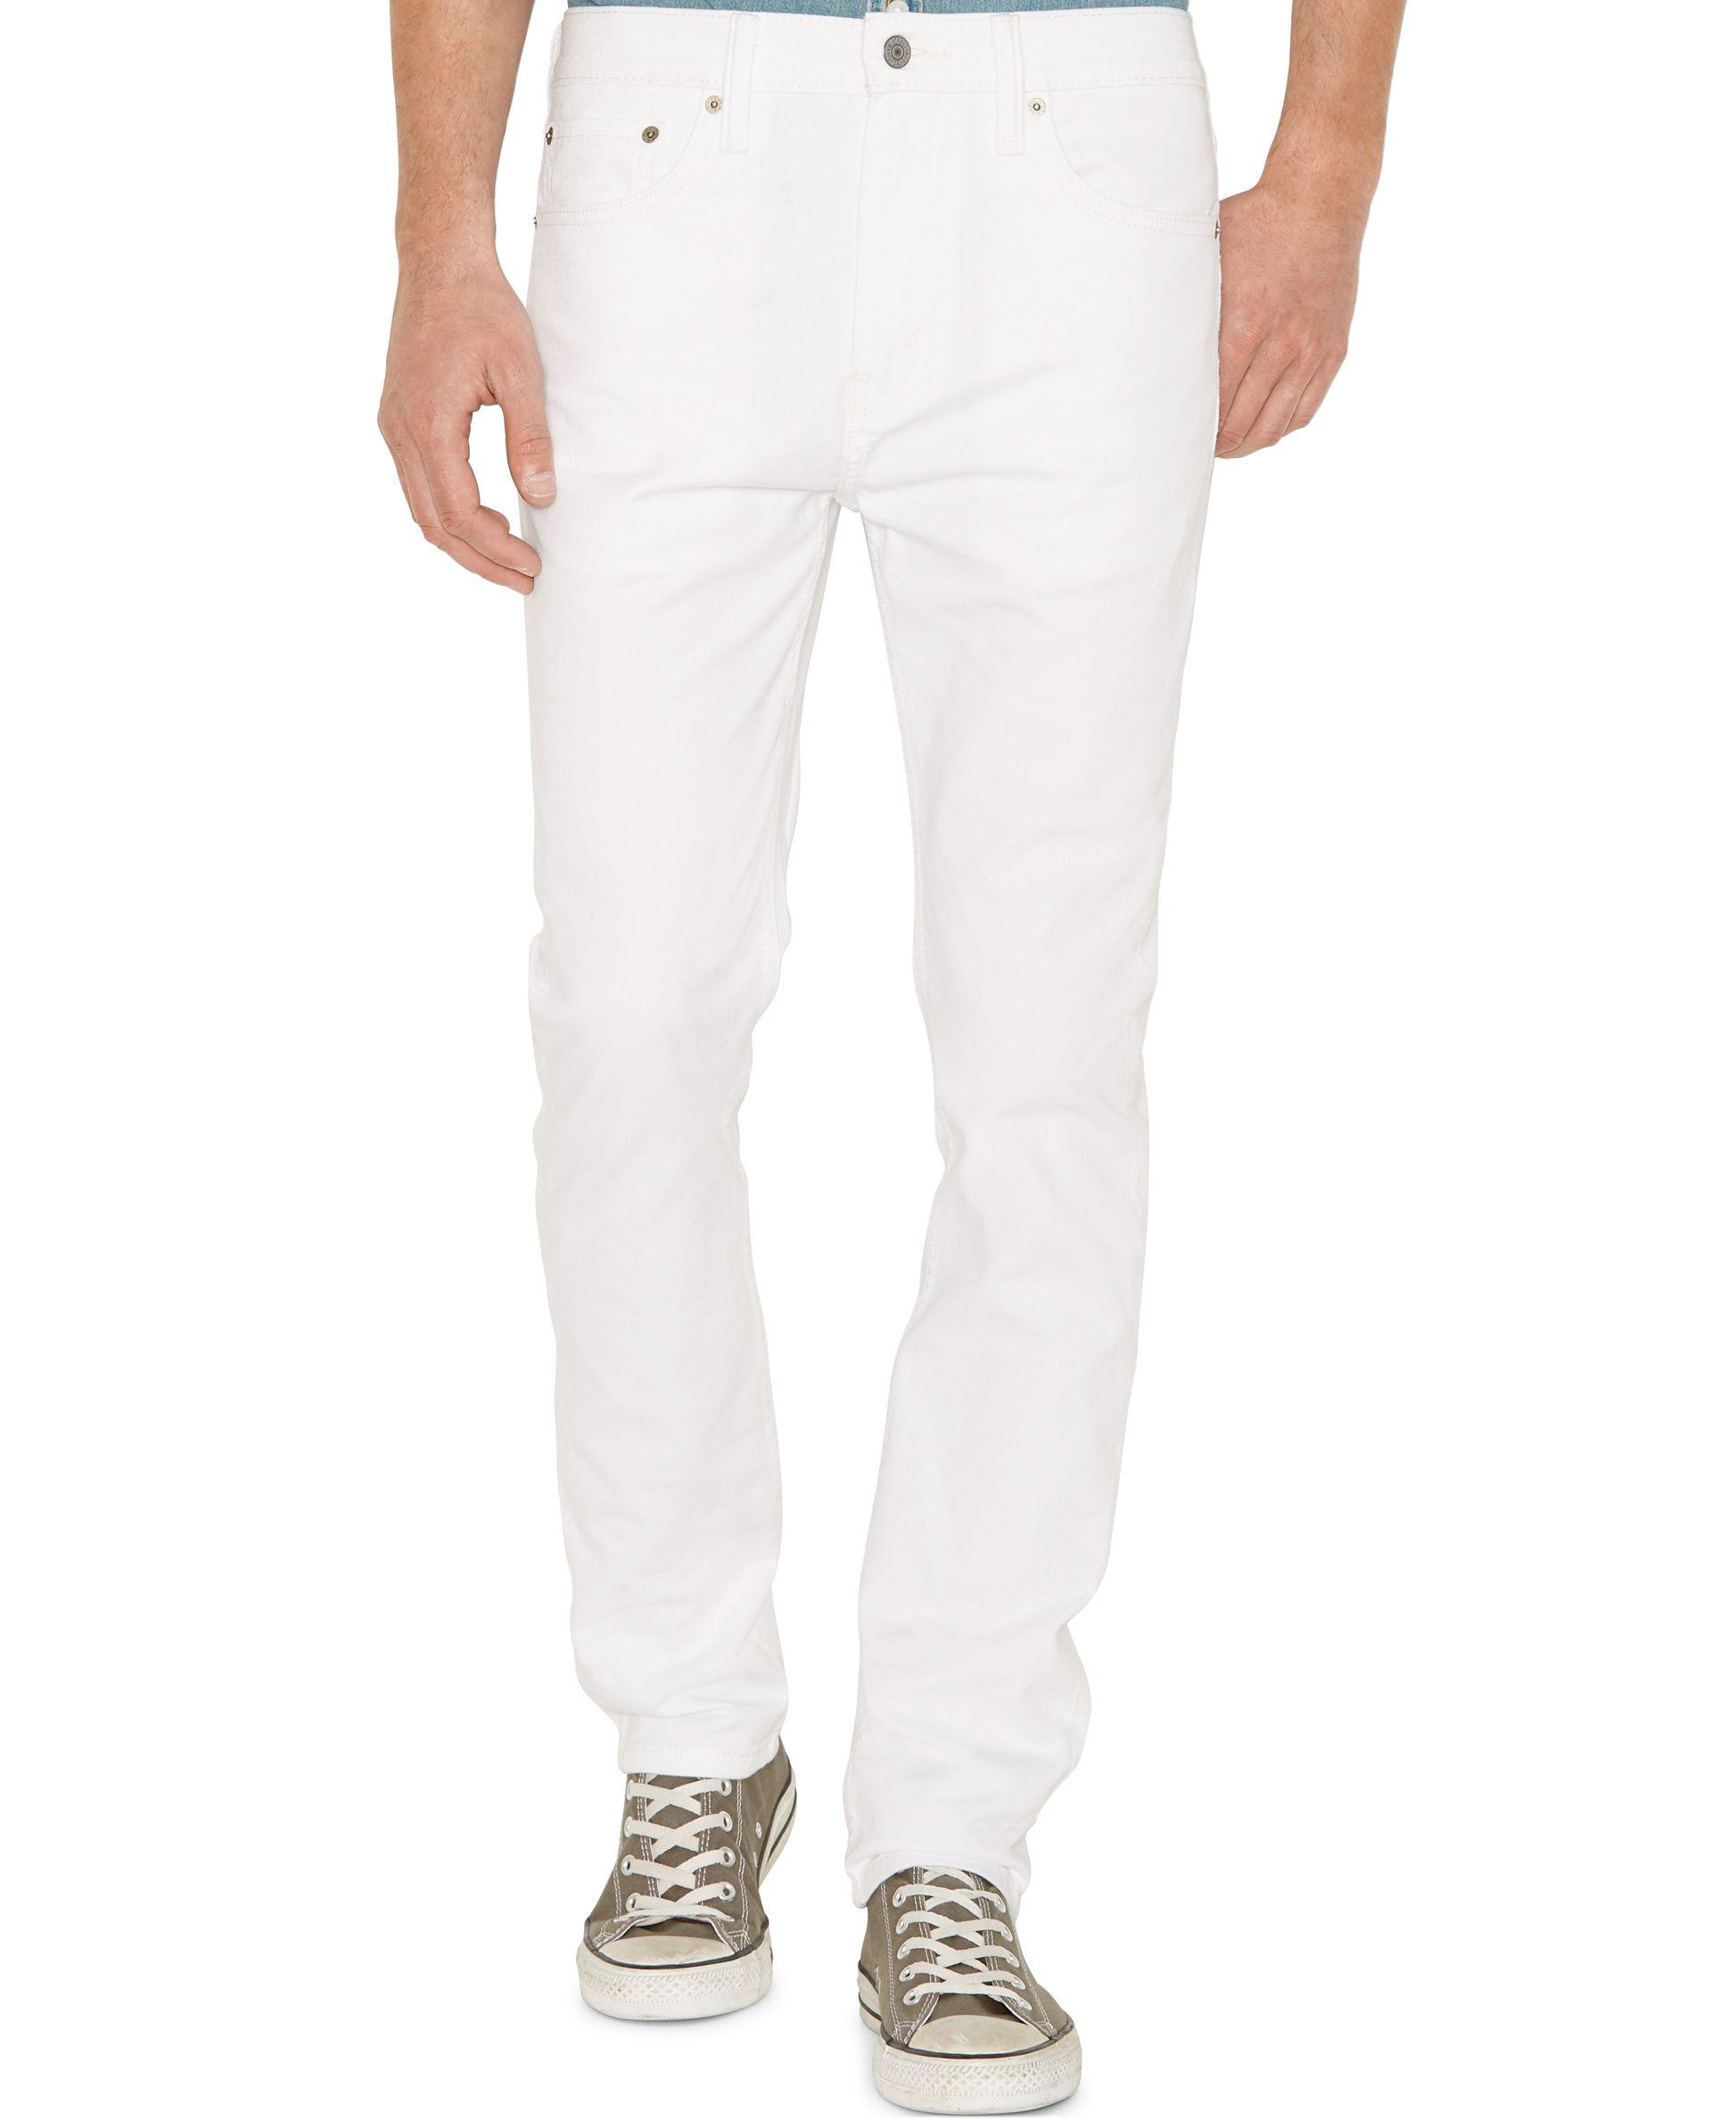 levi's white jeans online -